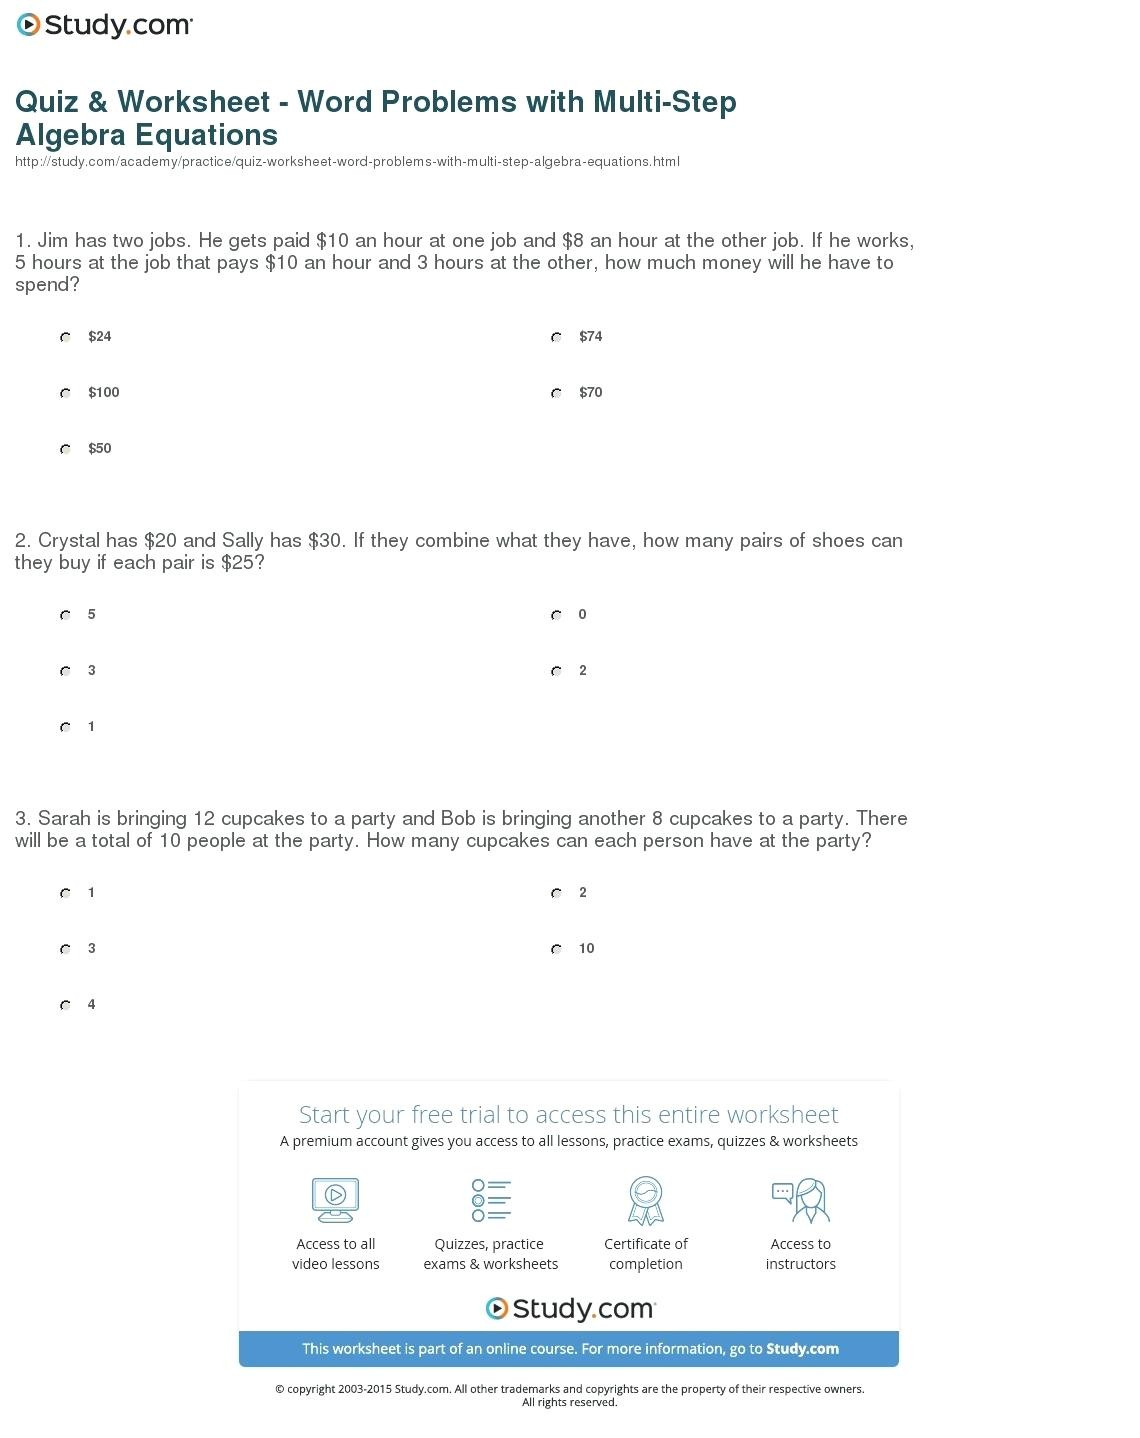 quadratic-formula-word-problems-worksheet-answers-math-db-excel